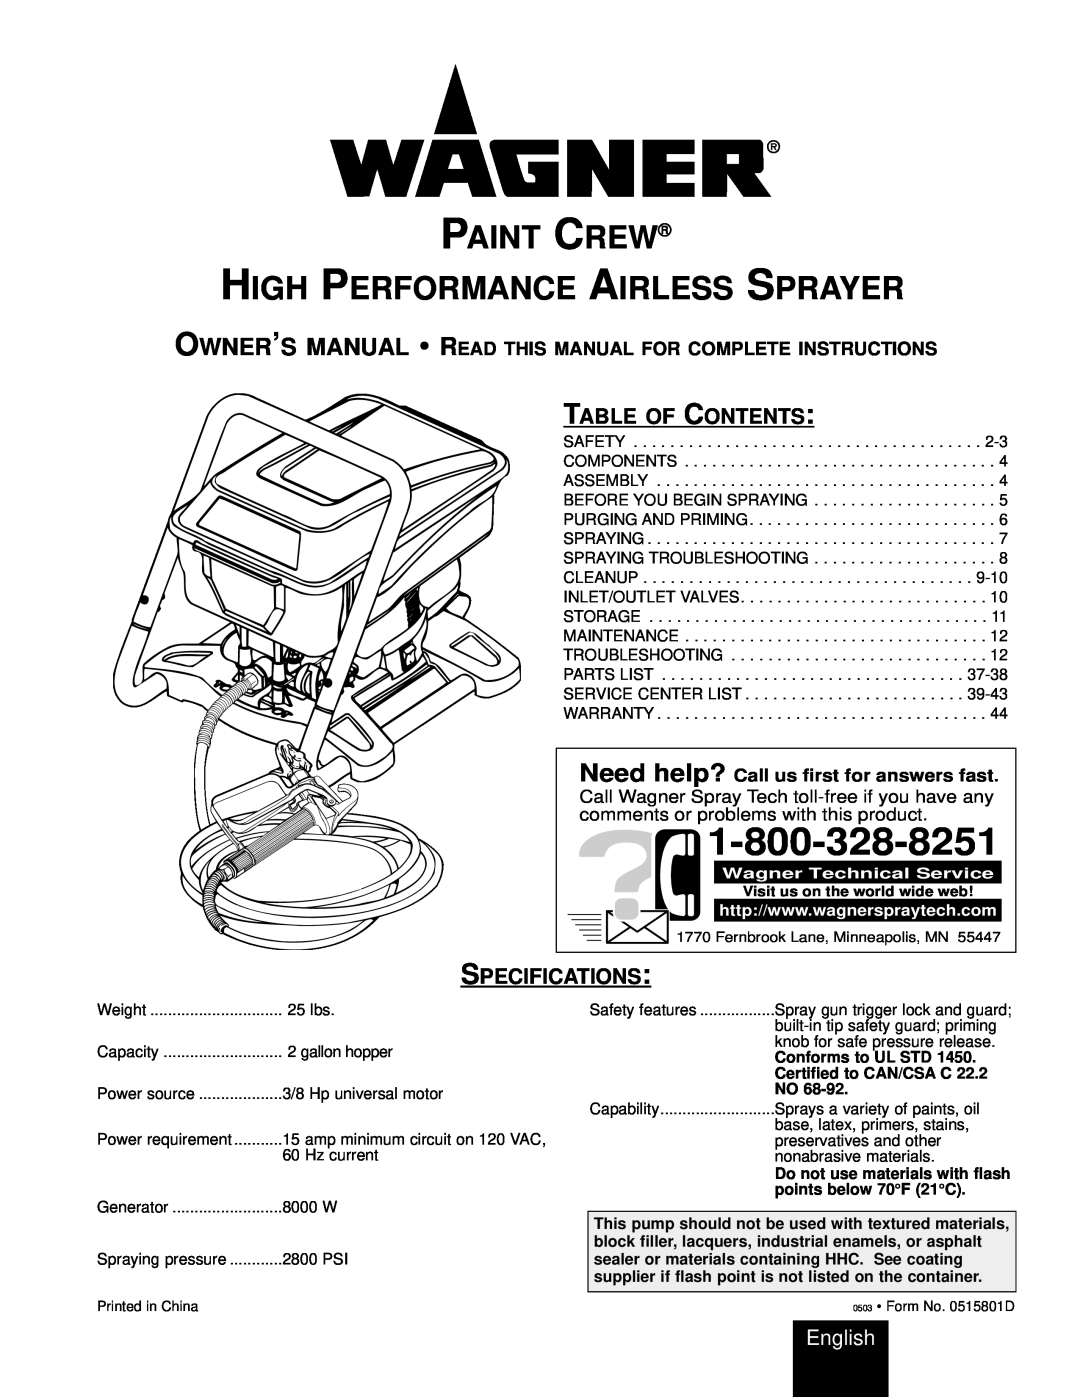 Wagner SprayTech HIGH PERFORMANCE AIRLESS SPRAYER owner manual Paint Crew High Performance Airless Sprayer, Specifications 